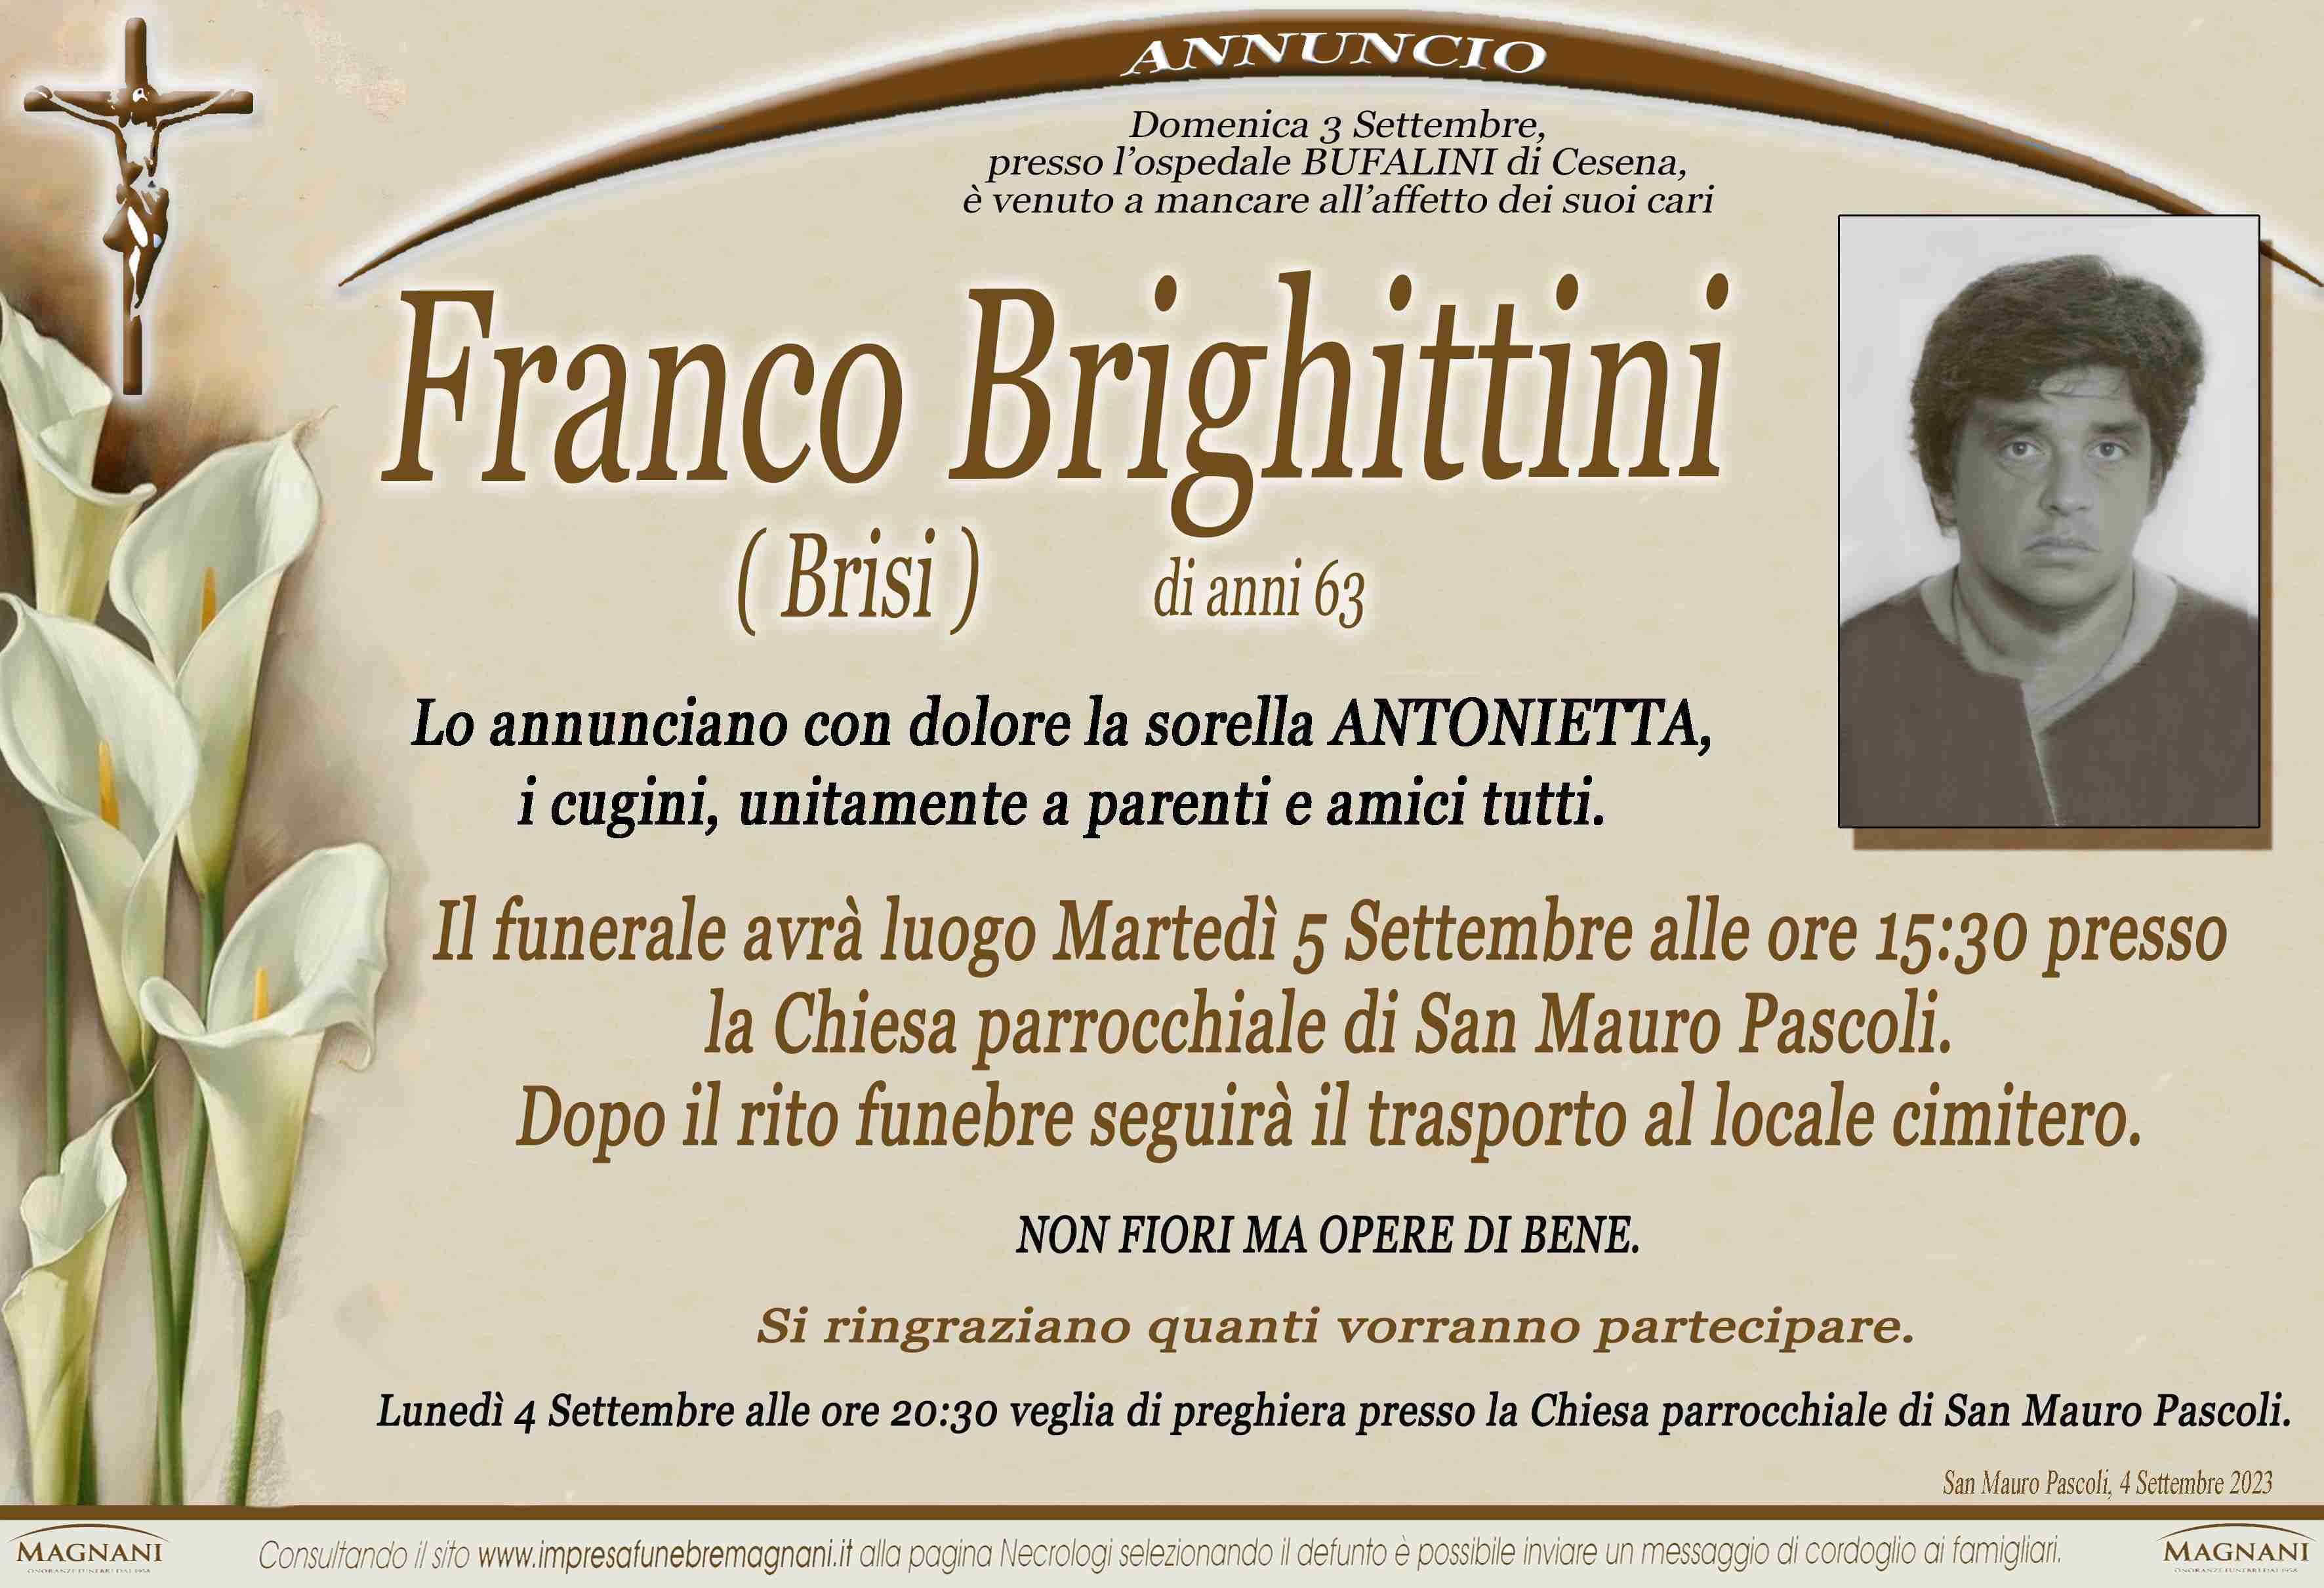 Franco Brighittini